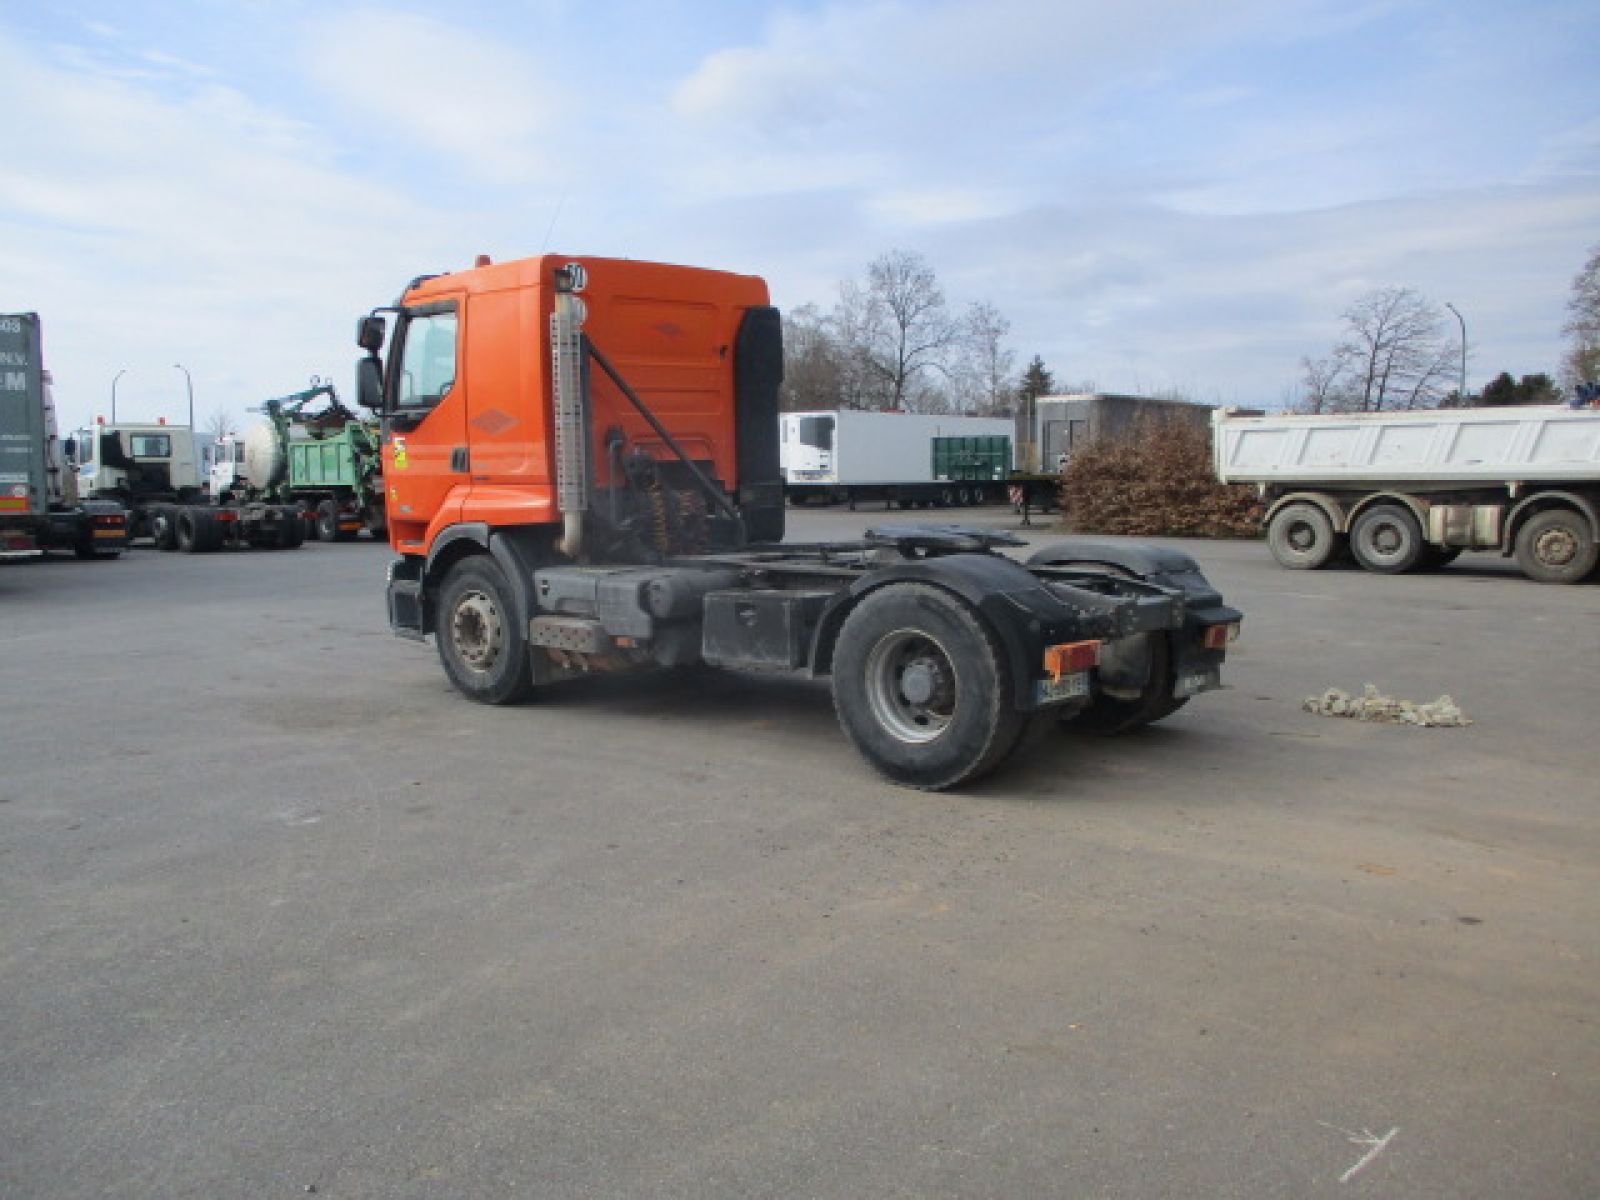  Unidades tractoras - RENAULT PREMIUM 420DCI  TRACTEUR (Belgique - Europe) - Houffalize Trading s.a.